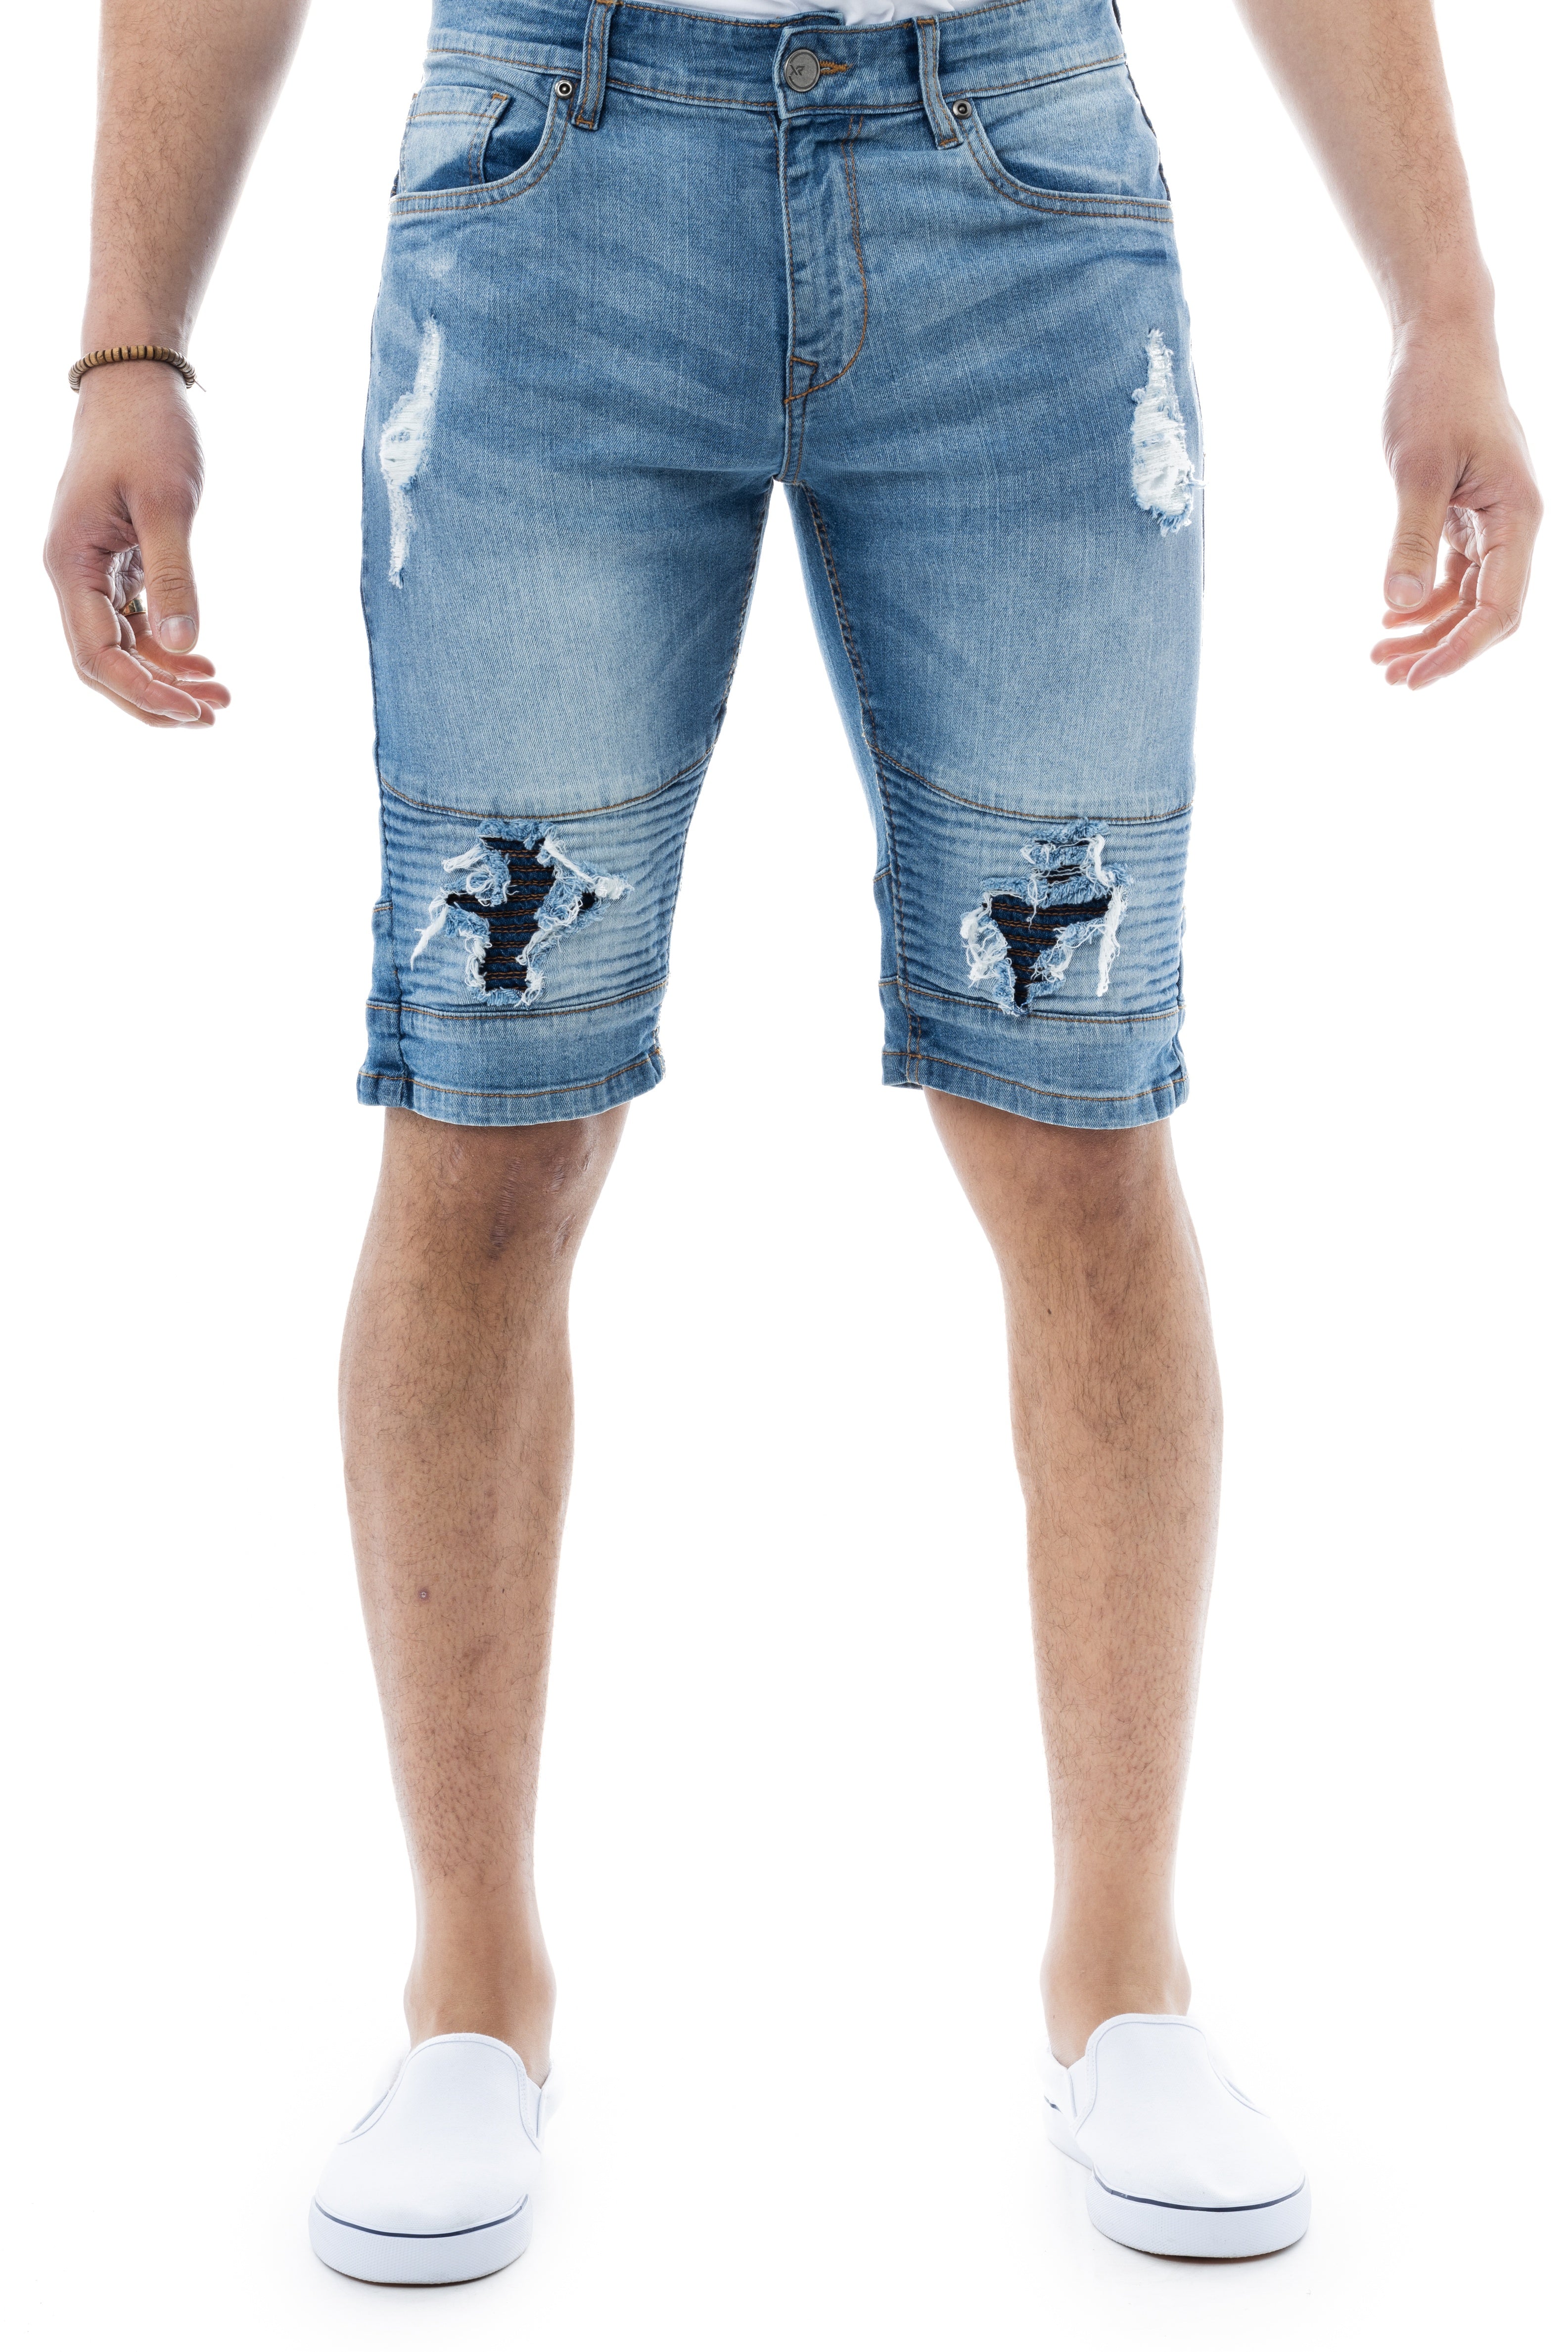 Baggy Jeans Shorts for Men - Dark Blue Denim Shorts